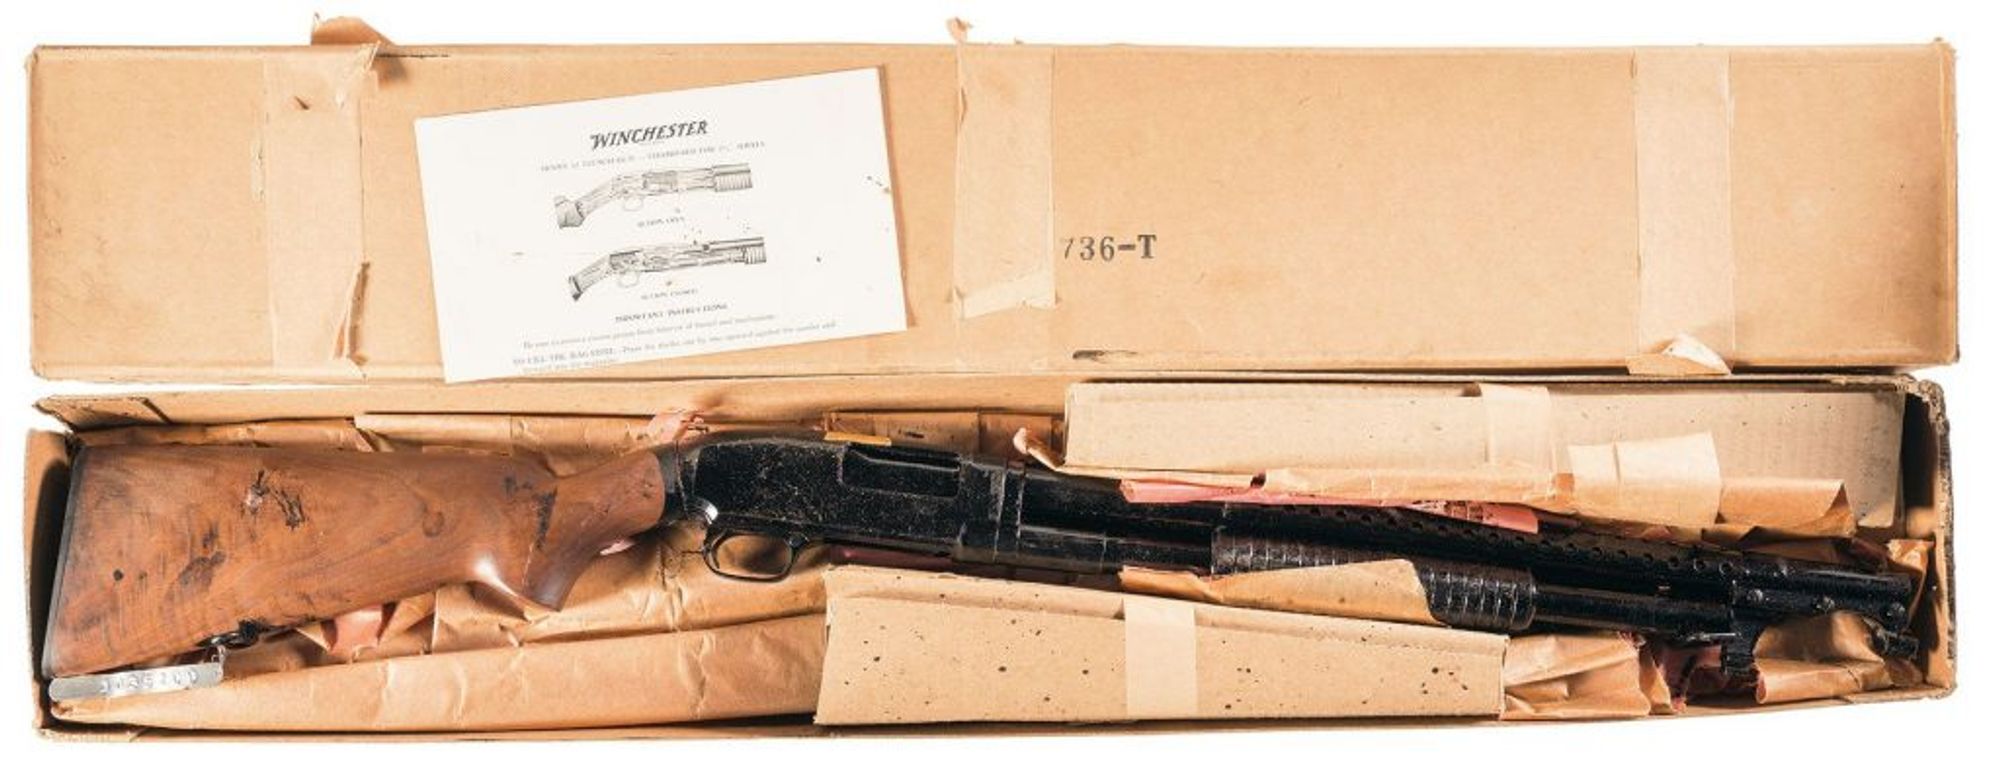 Model 12 trench shotgun